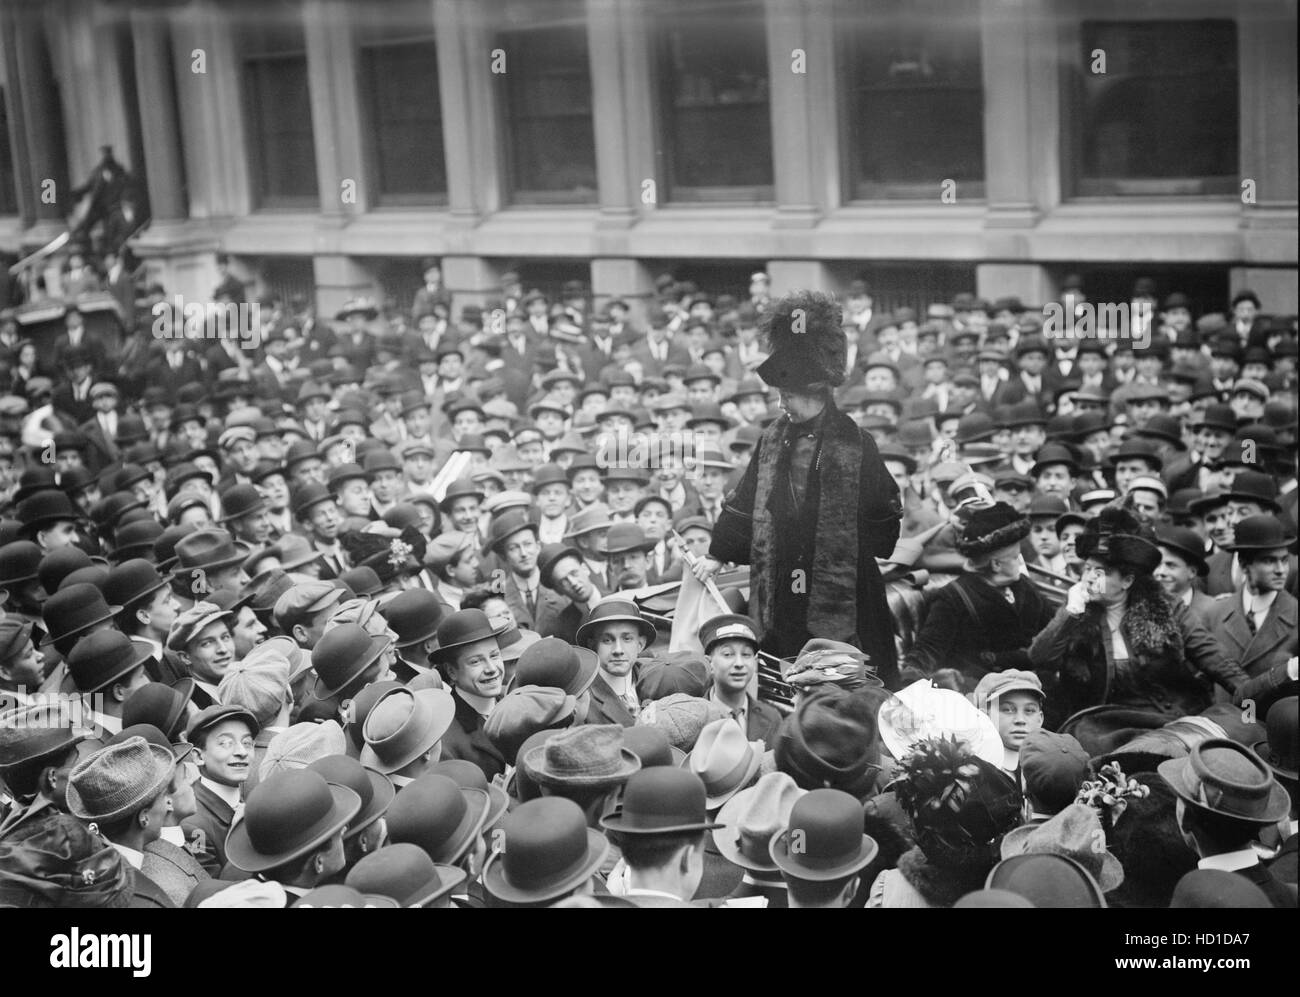 British Suffragist Leader Emmeline Pankhurst Addressing Crowd, Wall Street, New York City, New York, USA, Bain News Service, November 27, 1911 Stock Photo